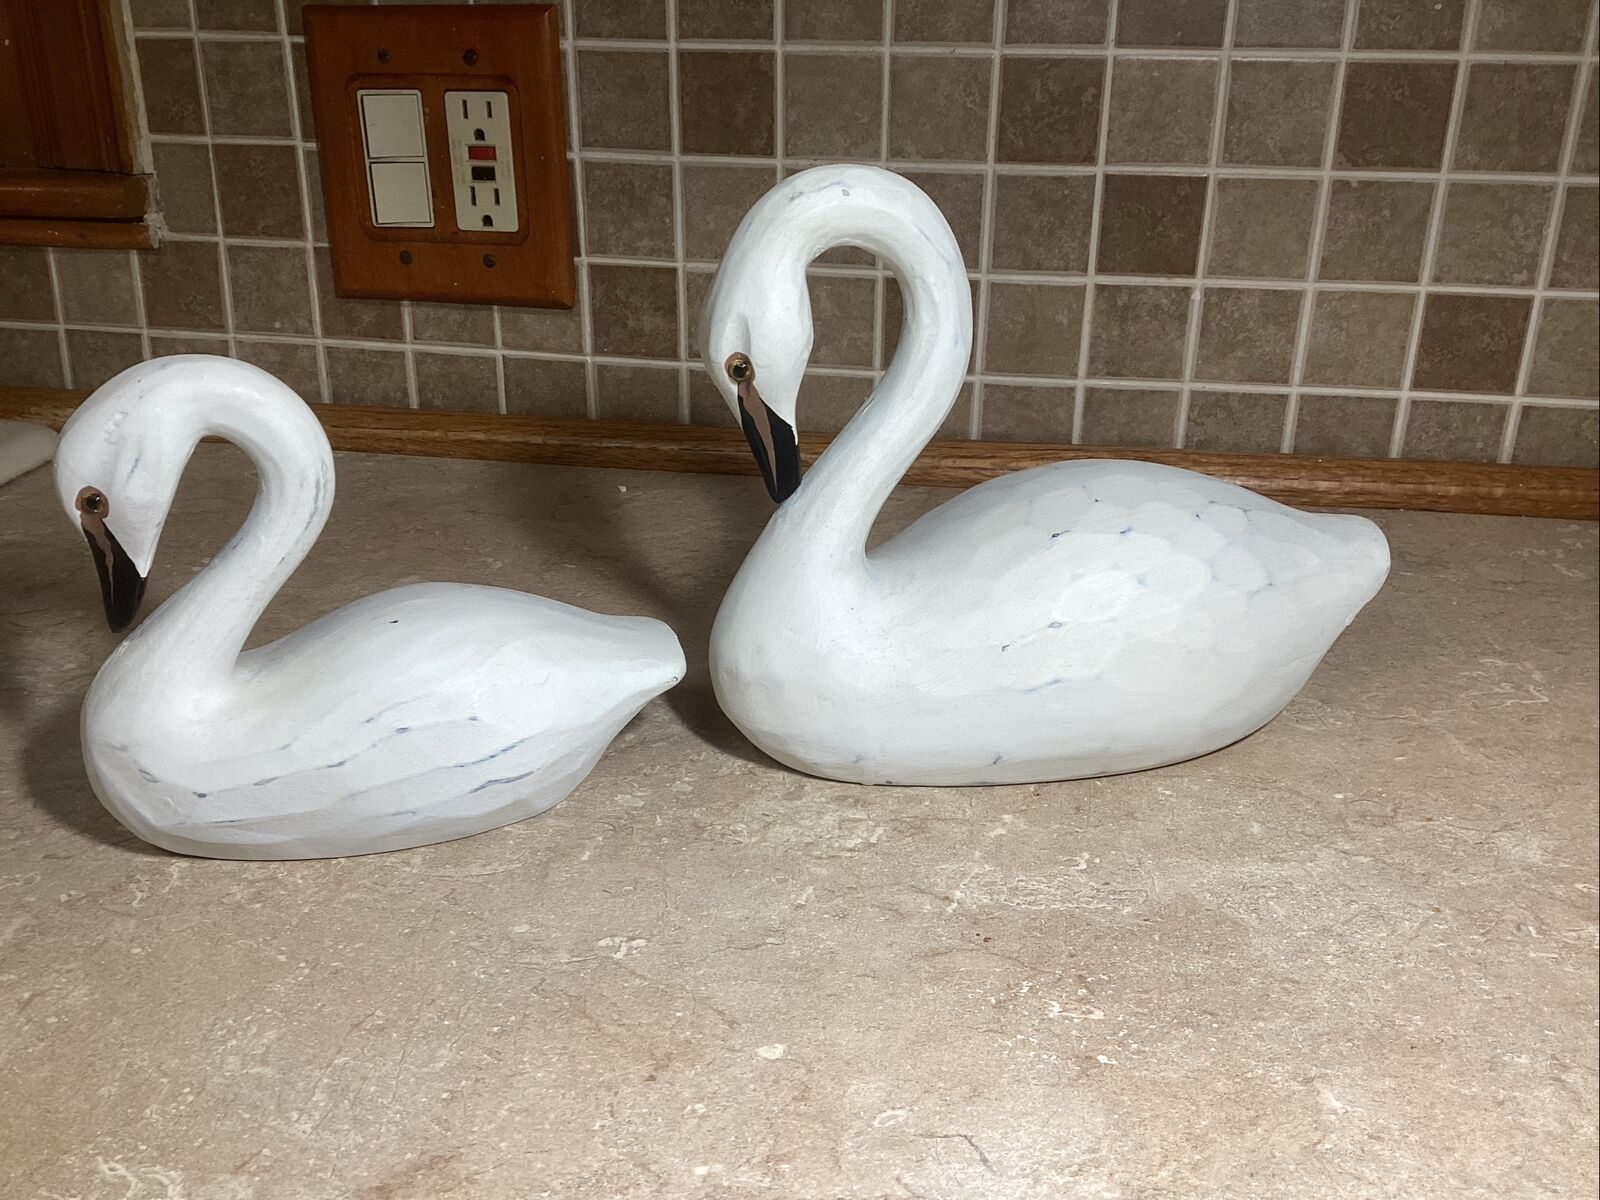 2 white swan home decor ceramic figurines  size 5” + 8” Tall